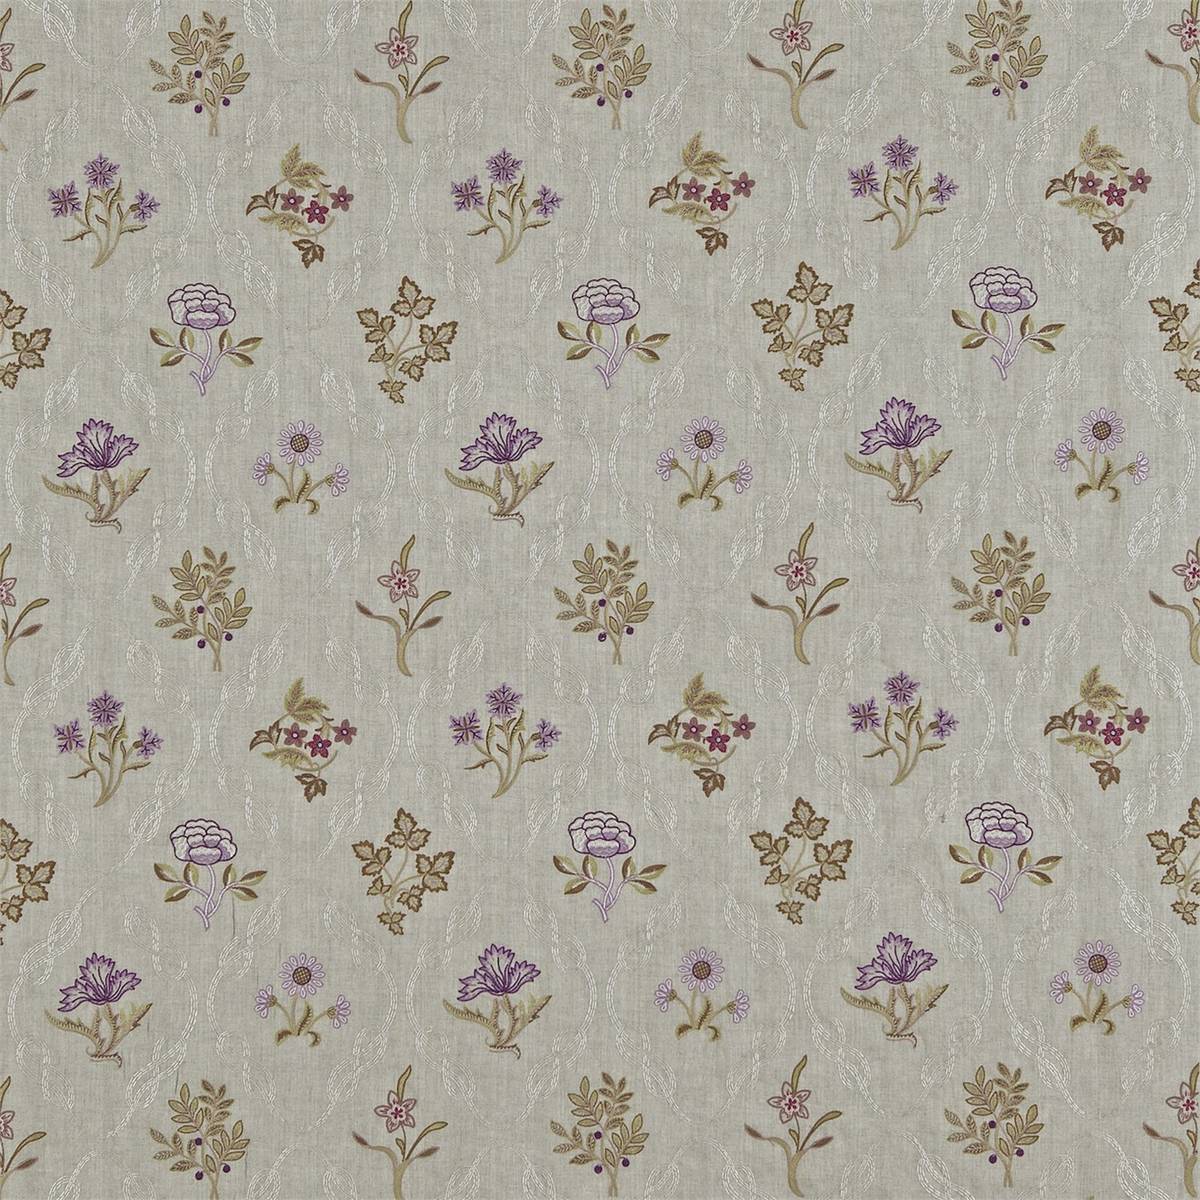 Kelmscott Trellis Linen/Aubergine Fabric by William Morris & Co.